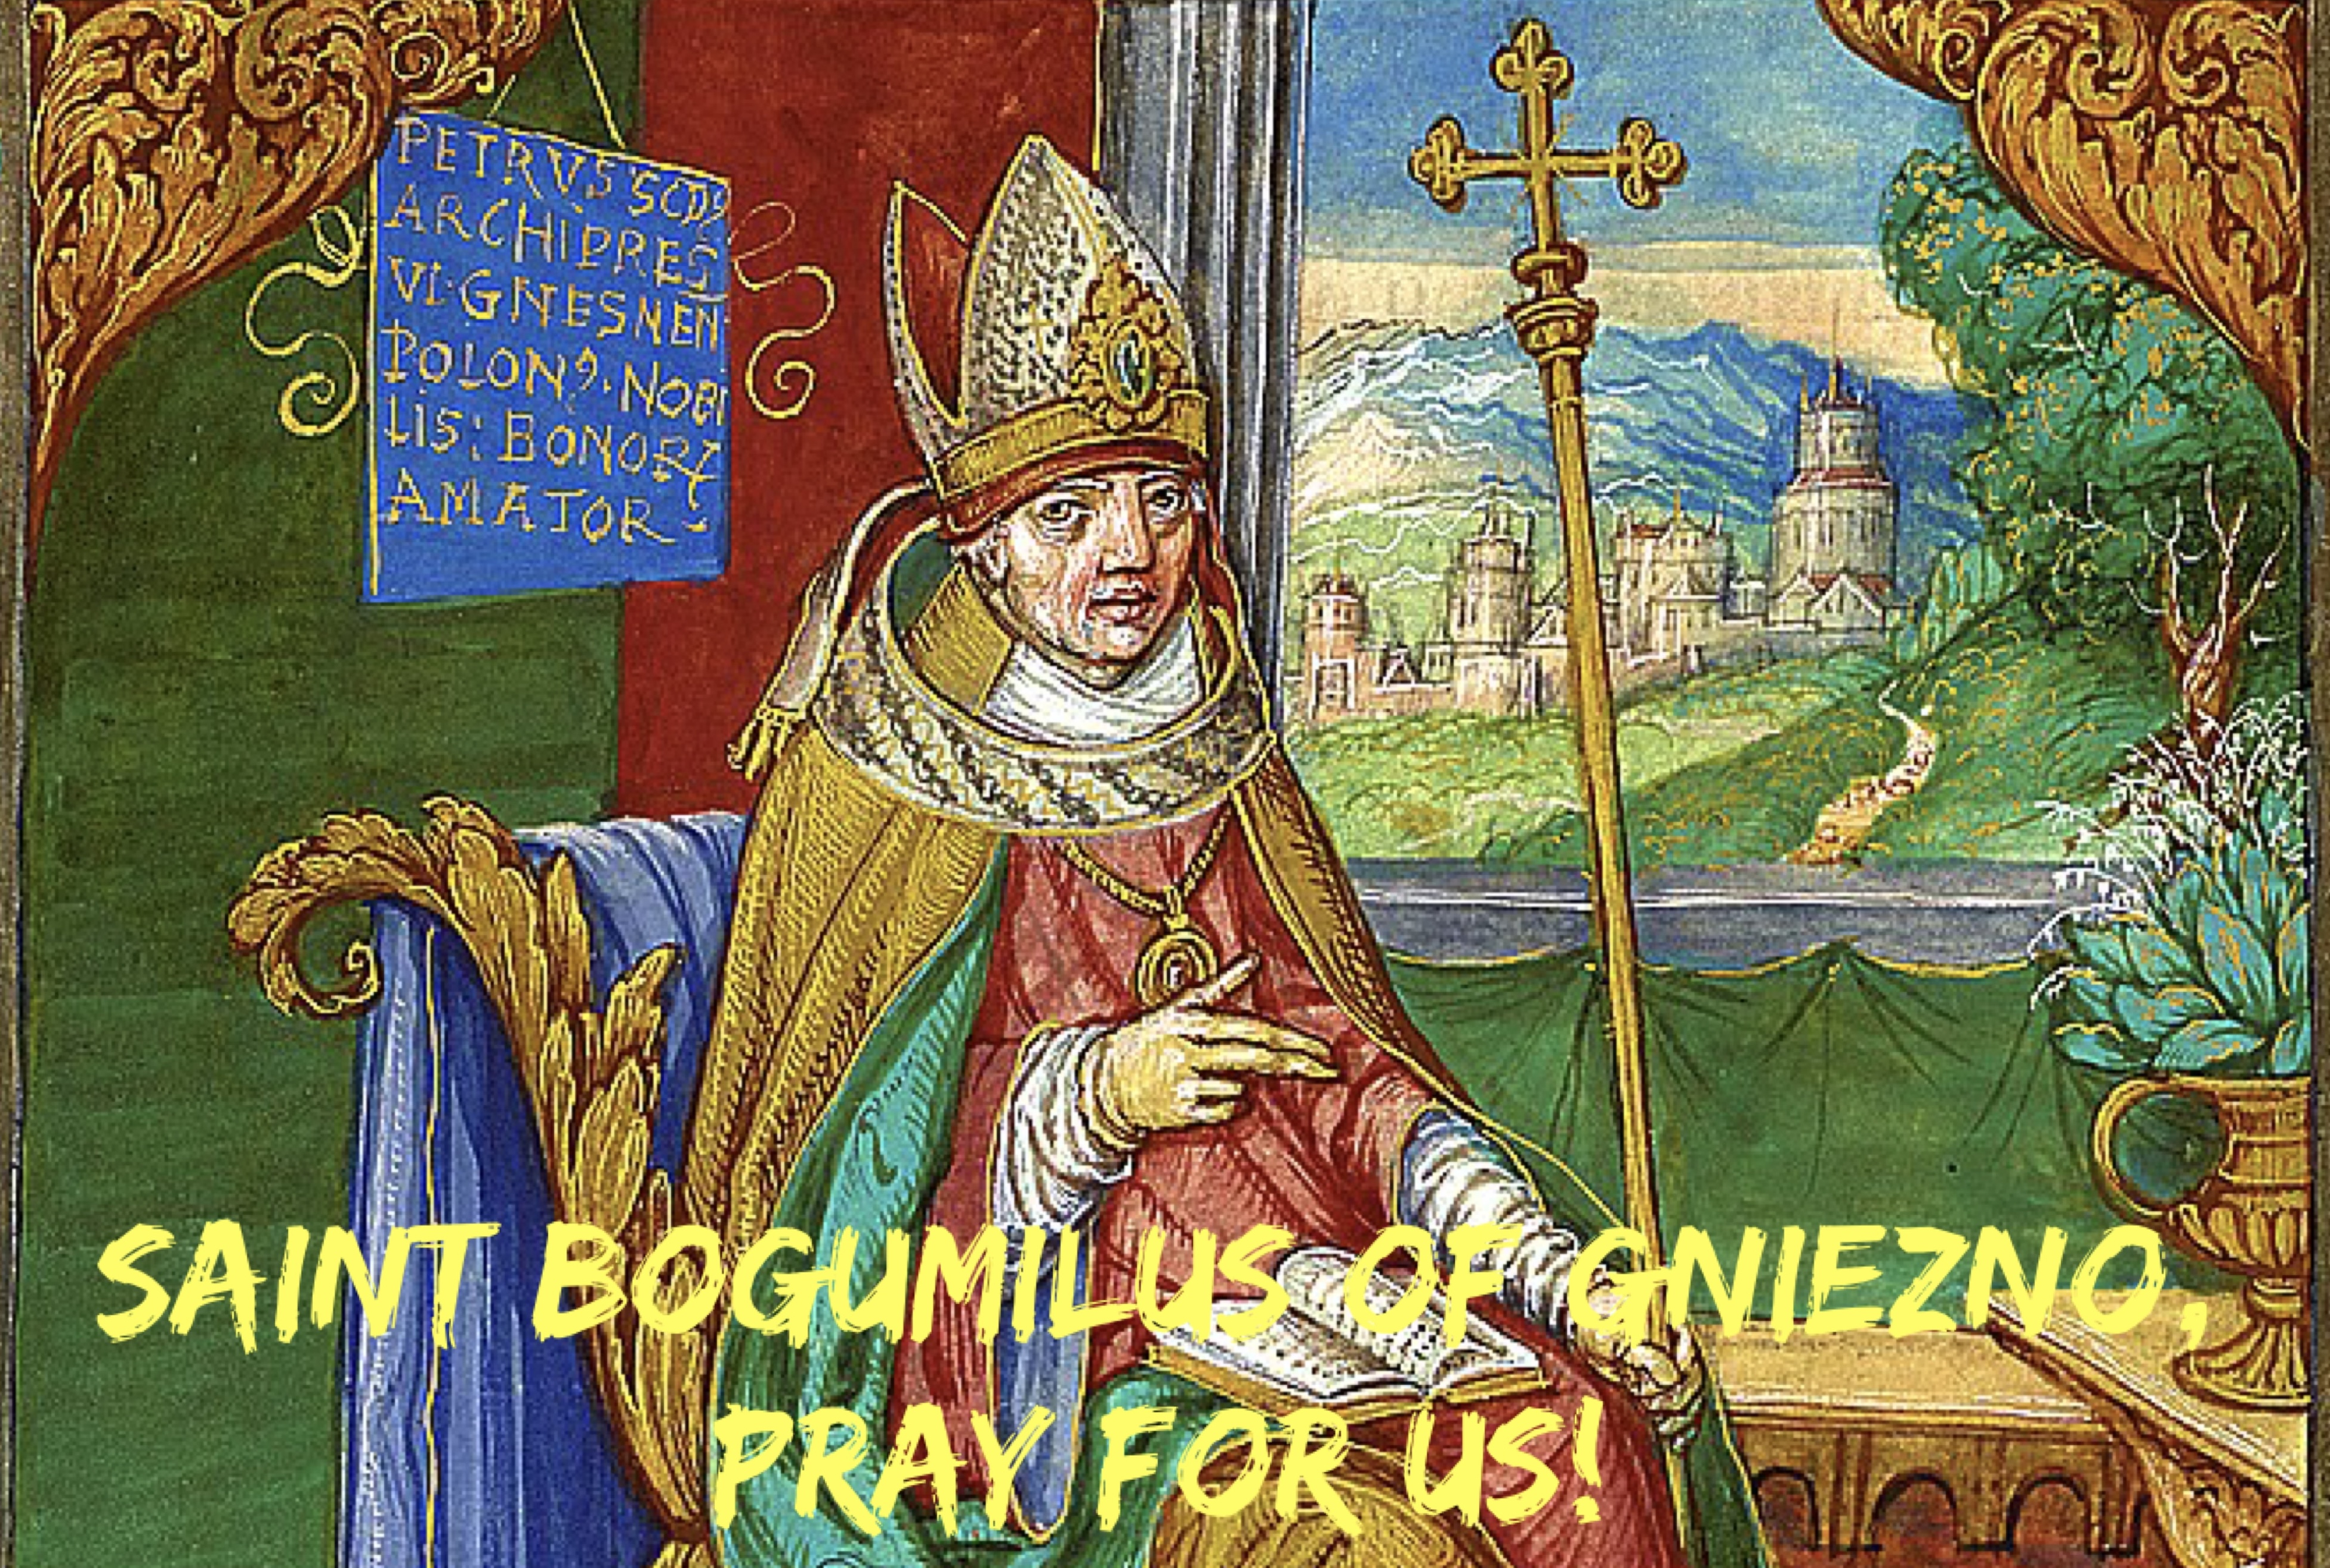 10th May - Saint Bogumilus of Gniezno